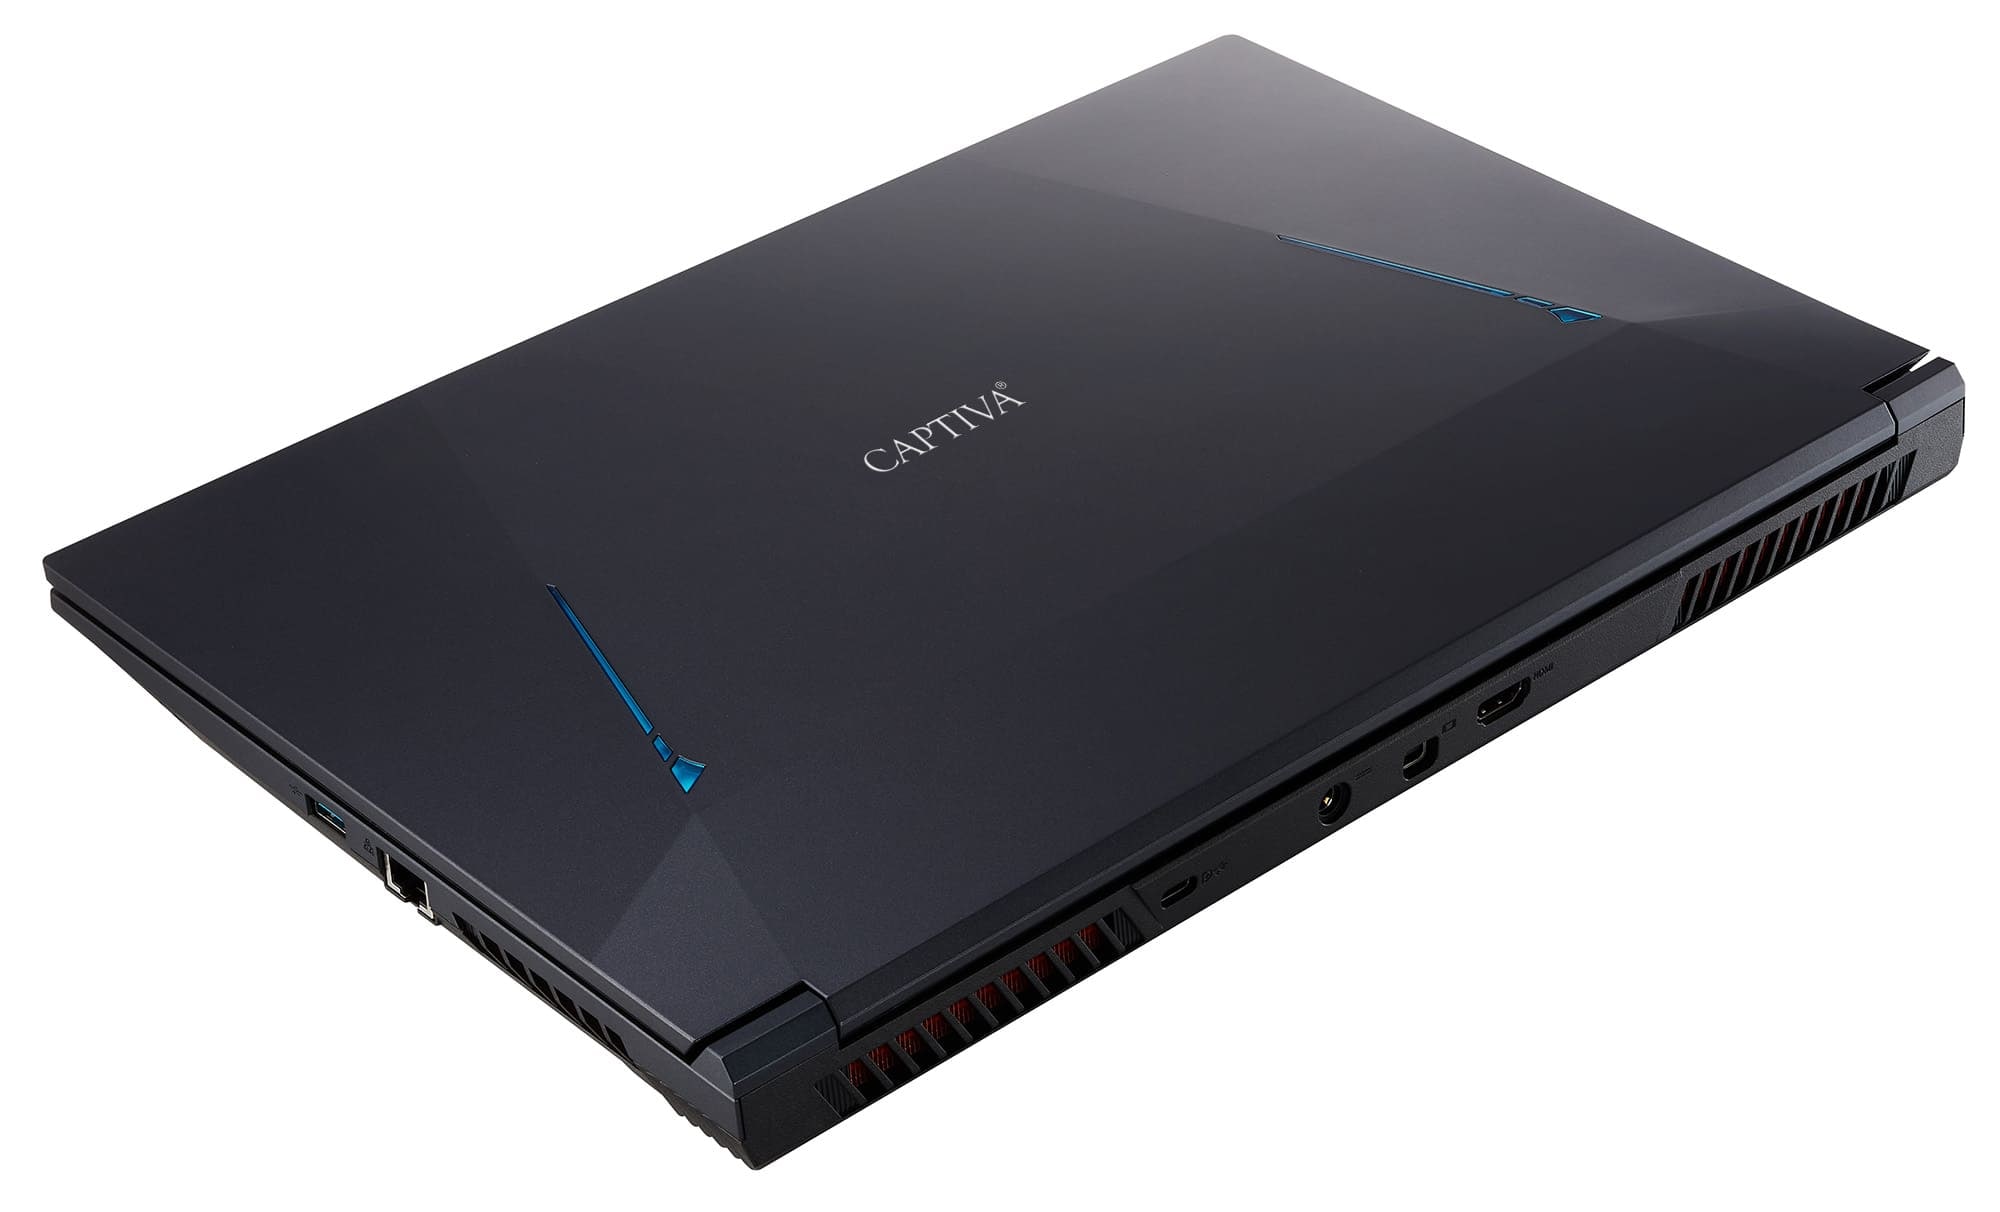 CAPTIVA Gaming-Notebook »Advanced Gaming I79-814ES«, Intel, Core i9, 2000 GB SSD